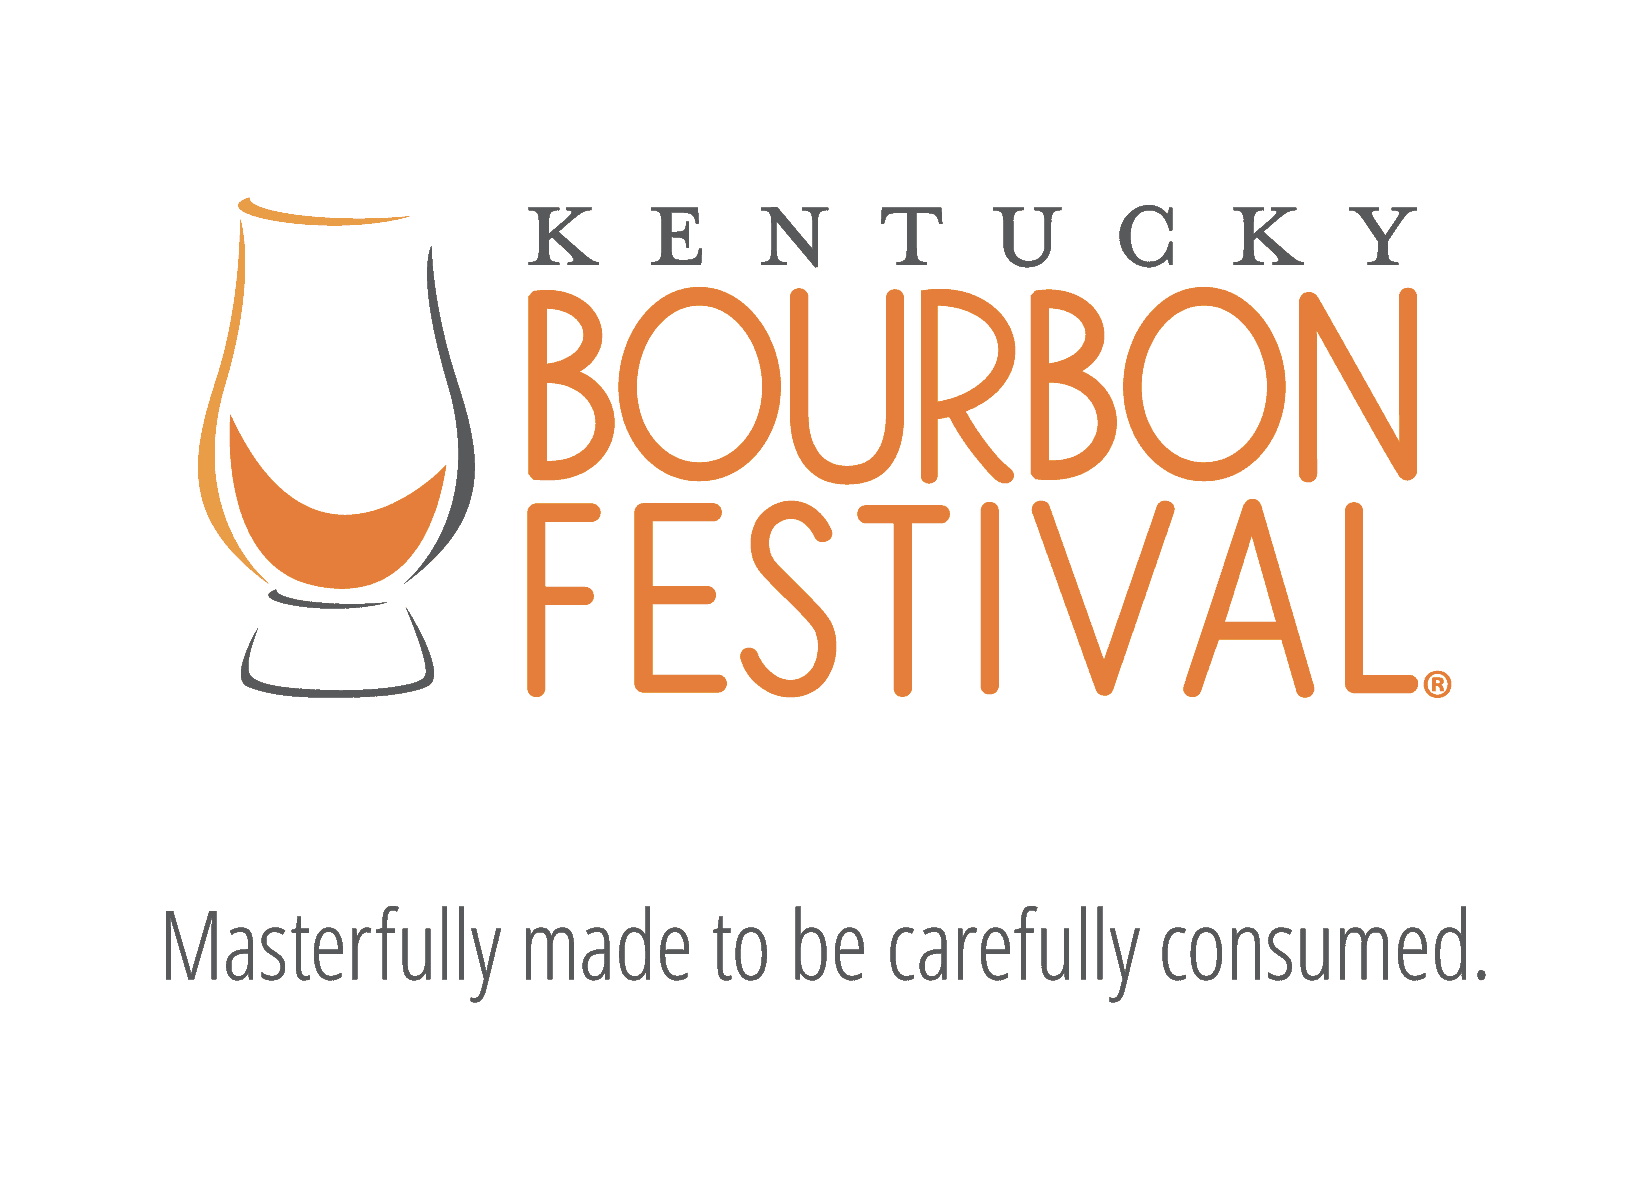 KBF logo 2 - KENTUCKY BOURBON FESTIVAL® TO HOST COMMUNITY EVENTS IN CELEBRATION OF NATIONAL BOURBON DAY